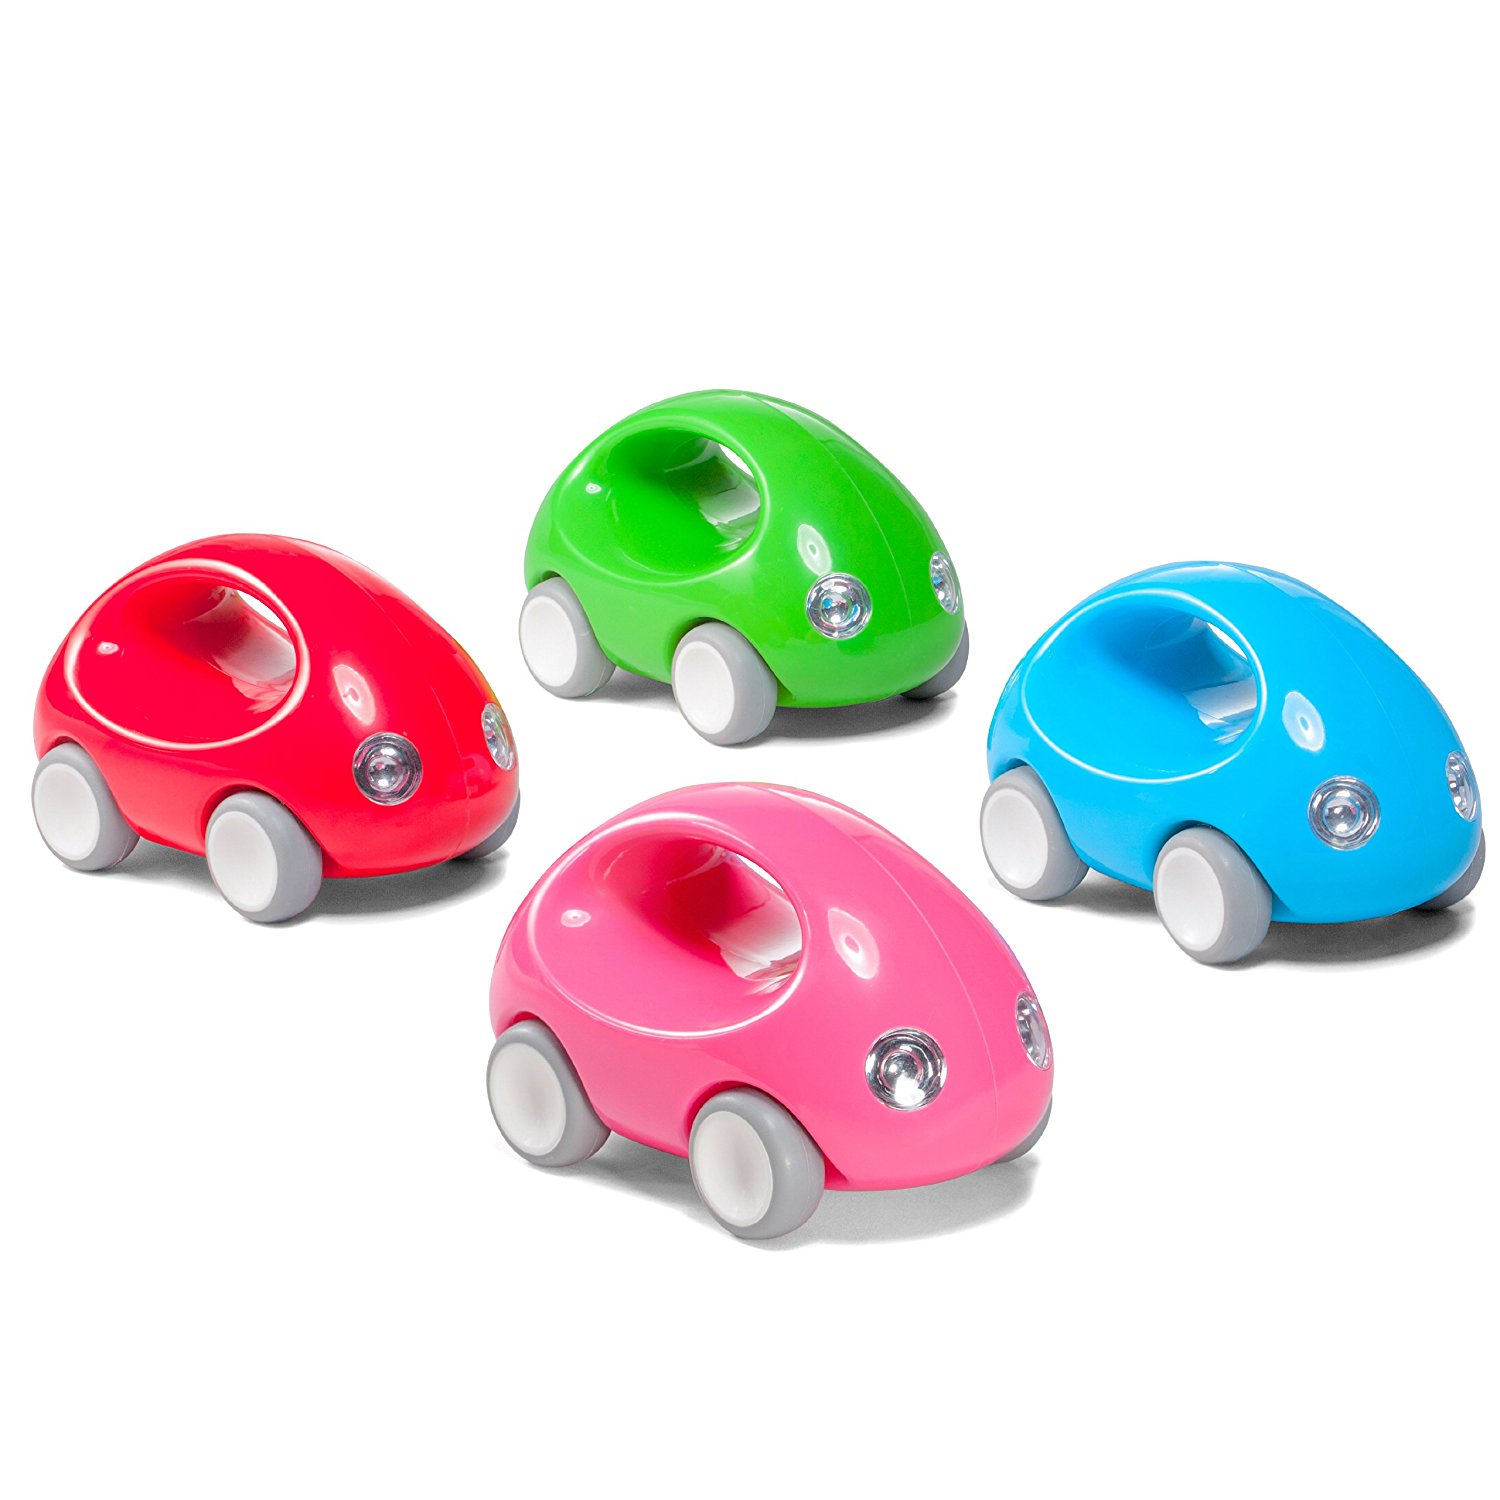 Amazon.com: Kid O Go Car Early Learning Push & Pull Toy - Green ...